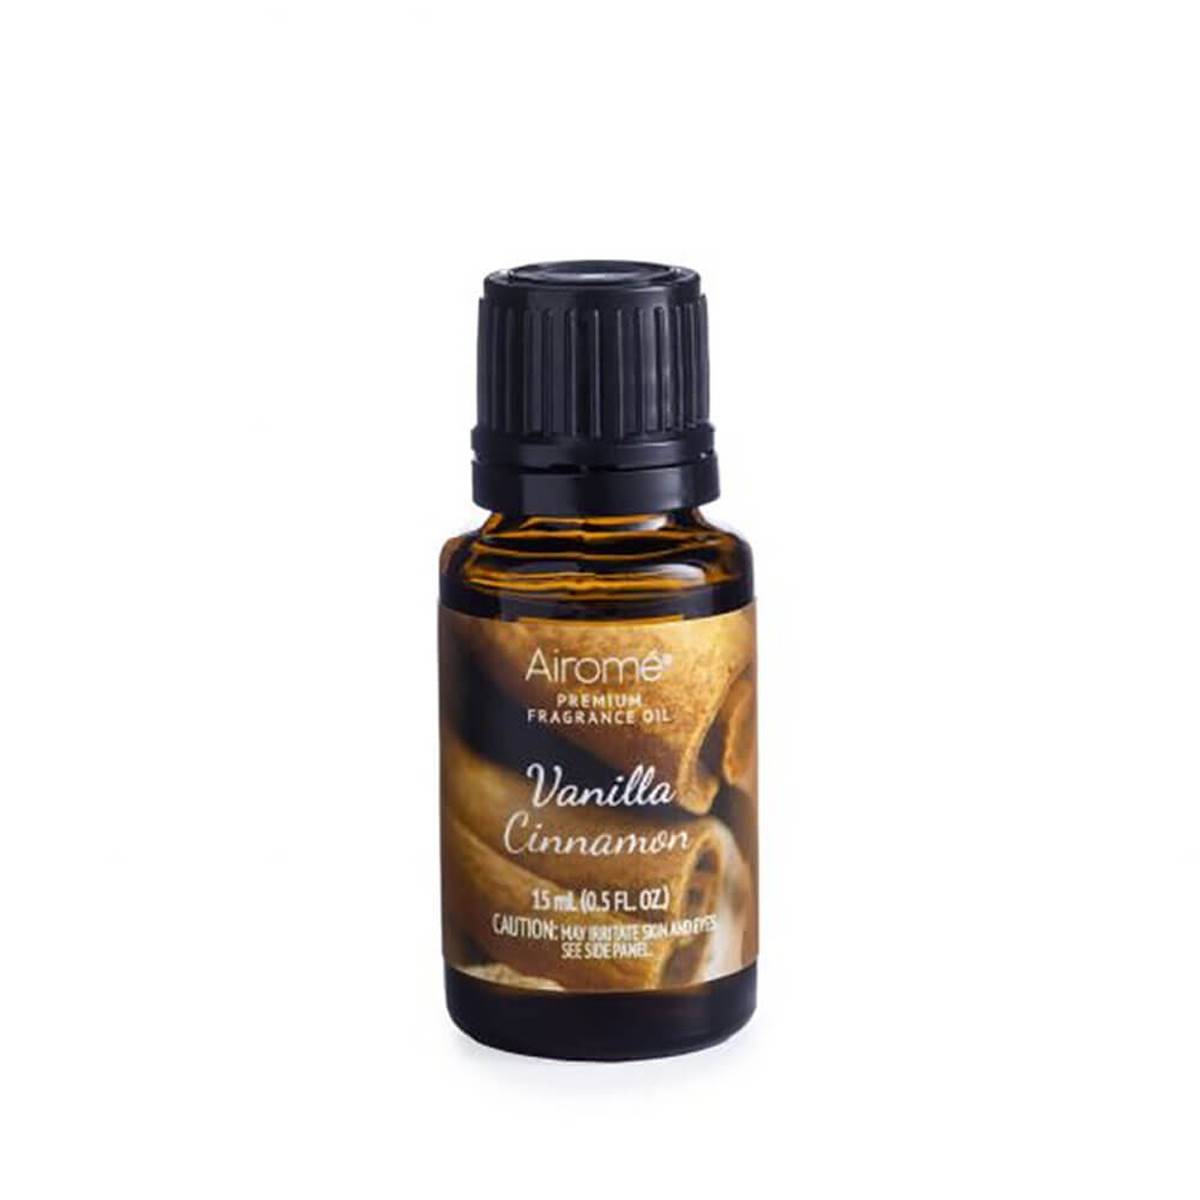 Airome  Vanilla Cinnamon Fragrance Oil - 15ml